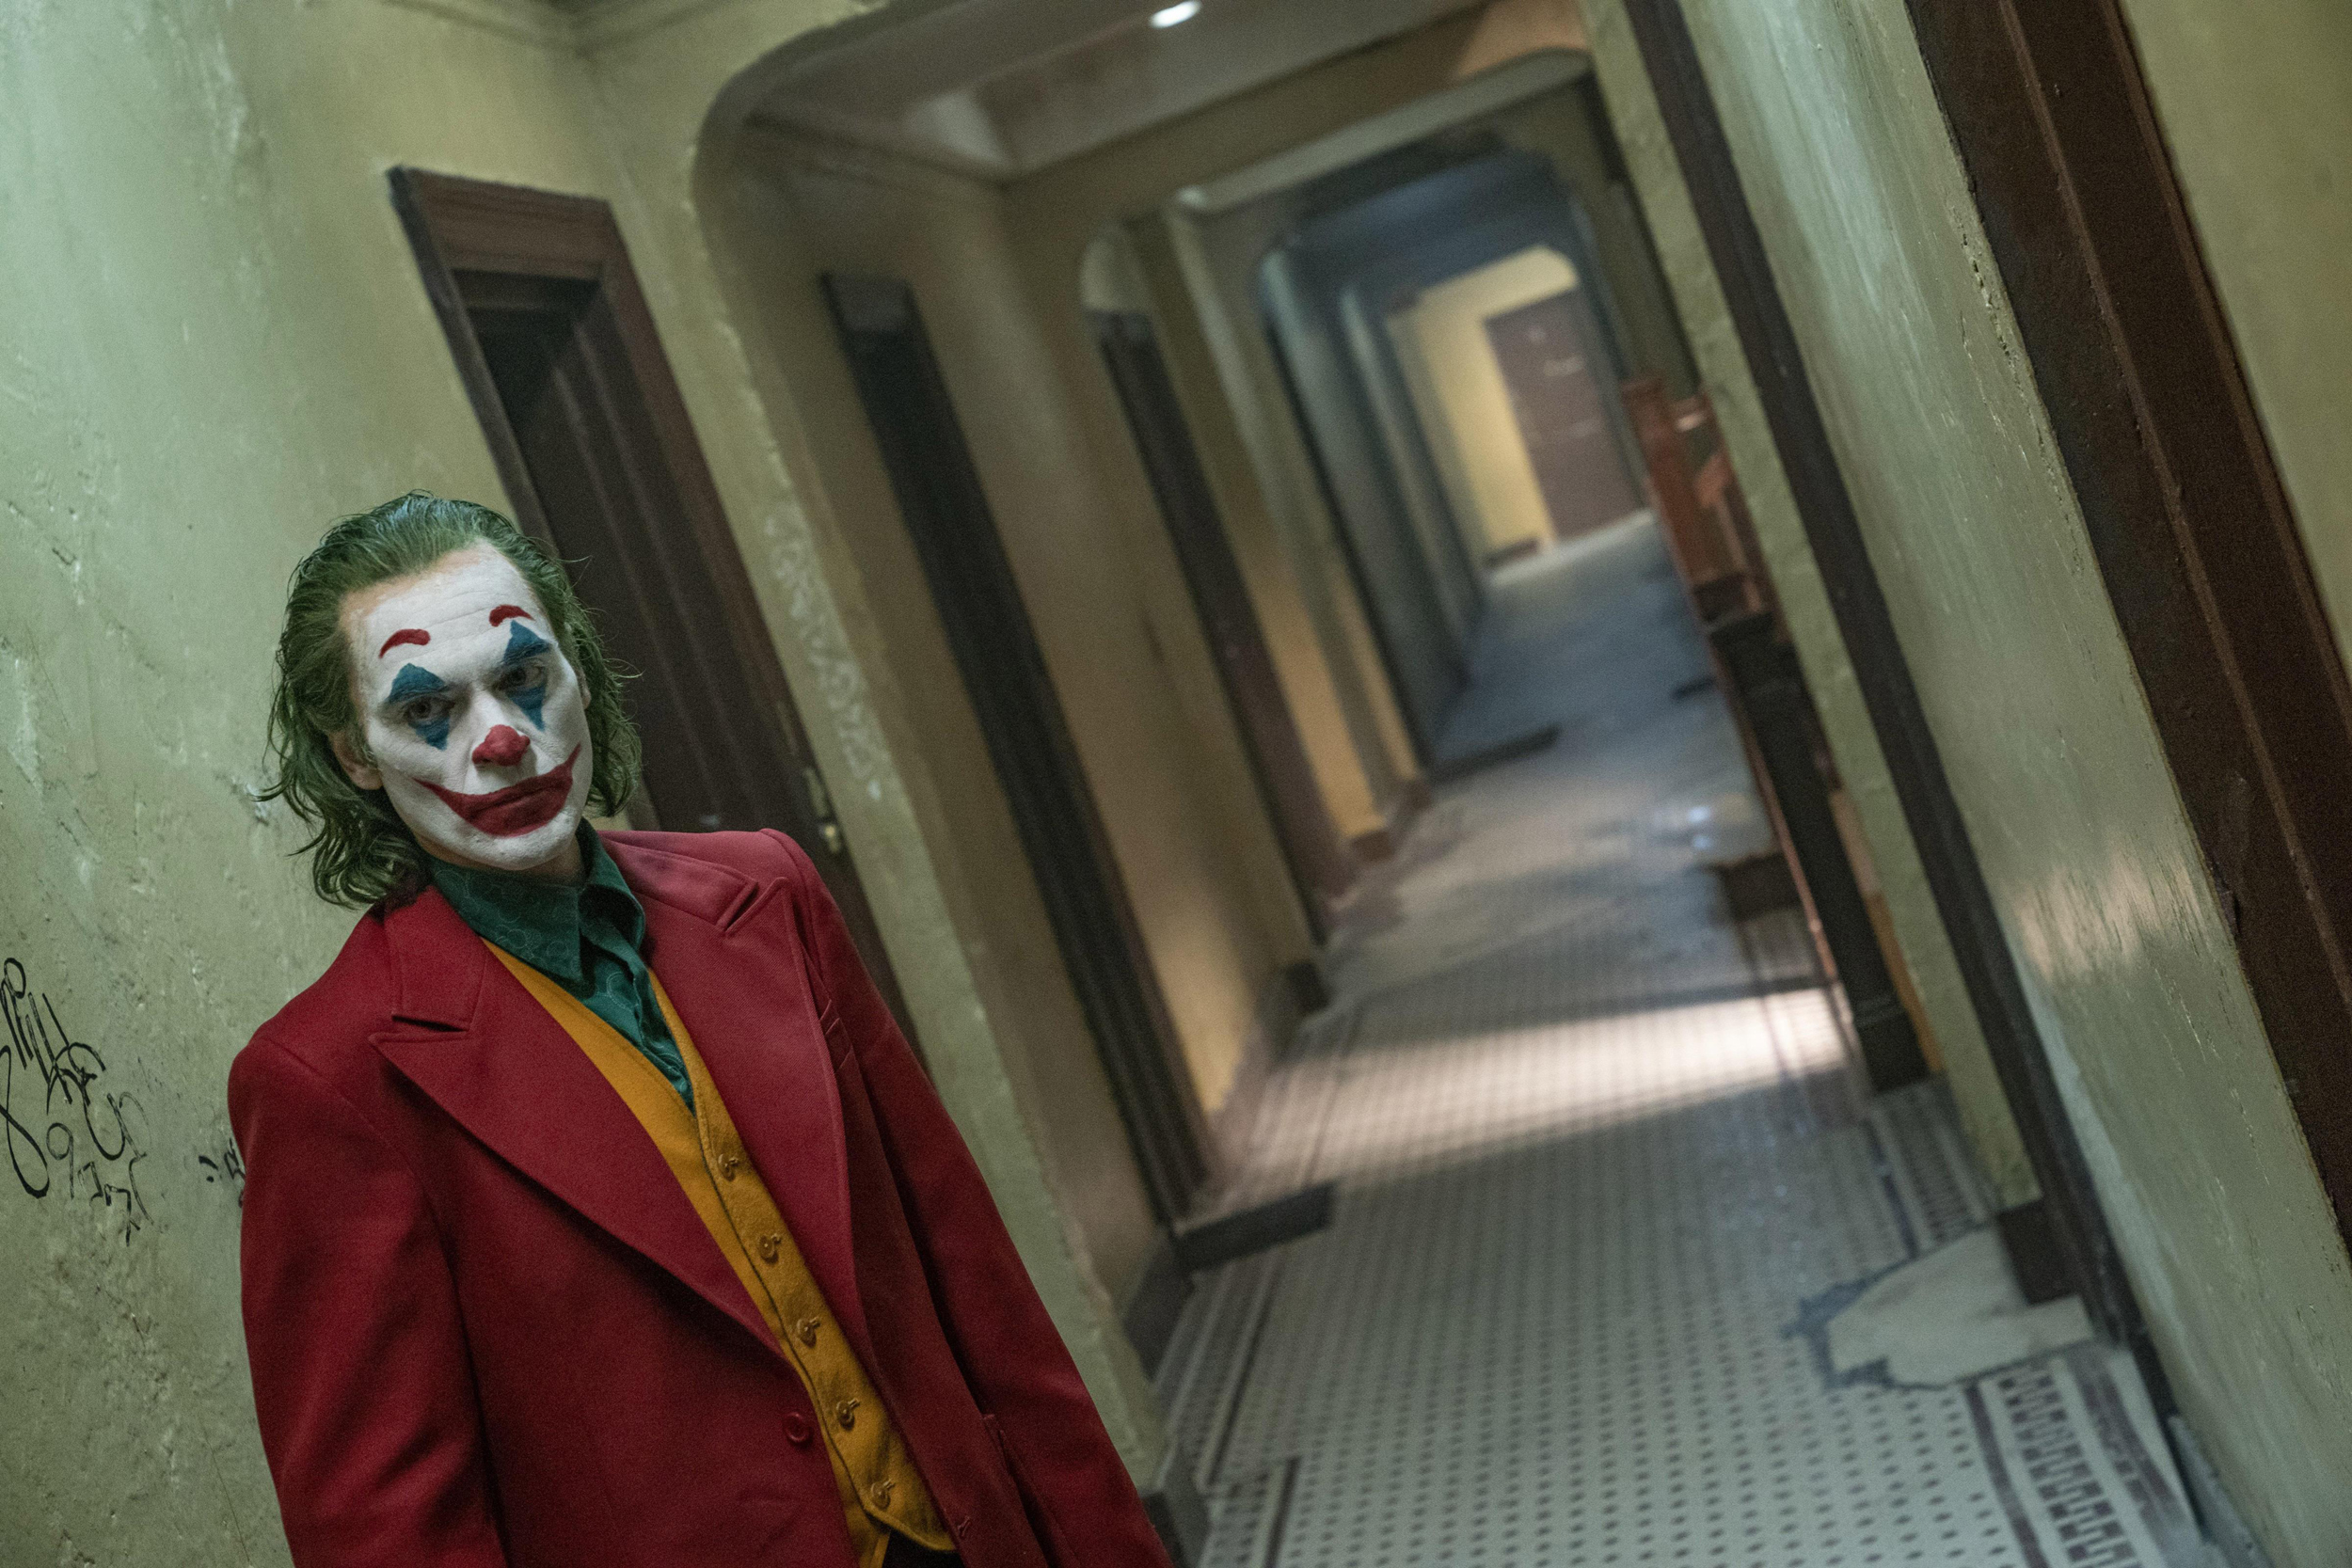 Joker (2019) Still - Joaquin Phoenix as Arthur Fleck / The Joker - Joker (2019) Photo ...2500 x 1667